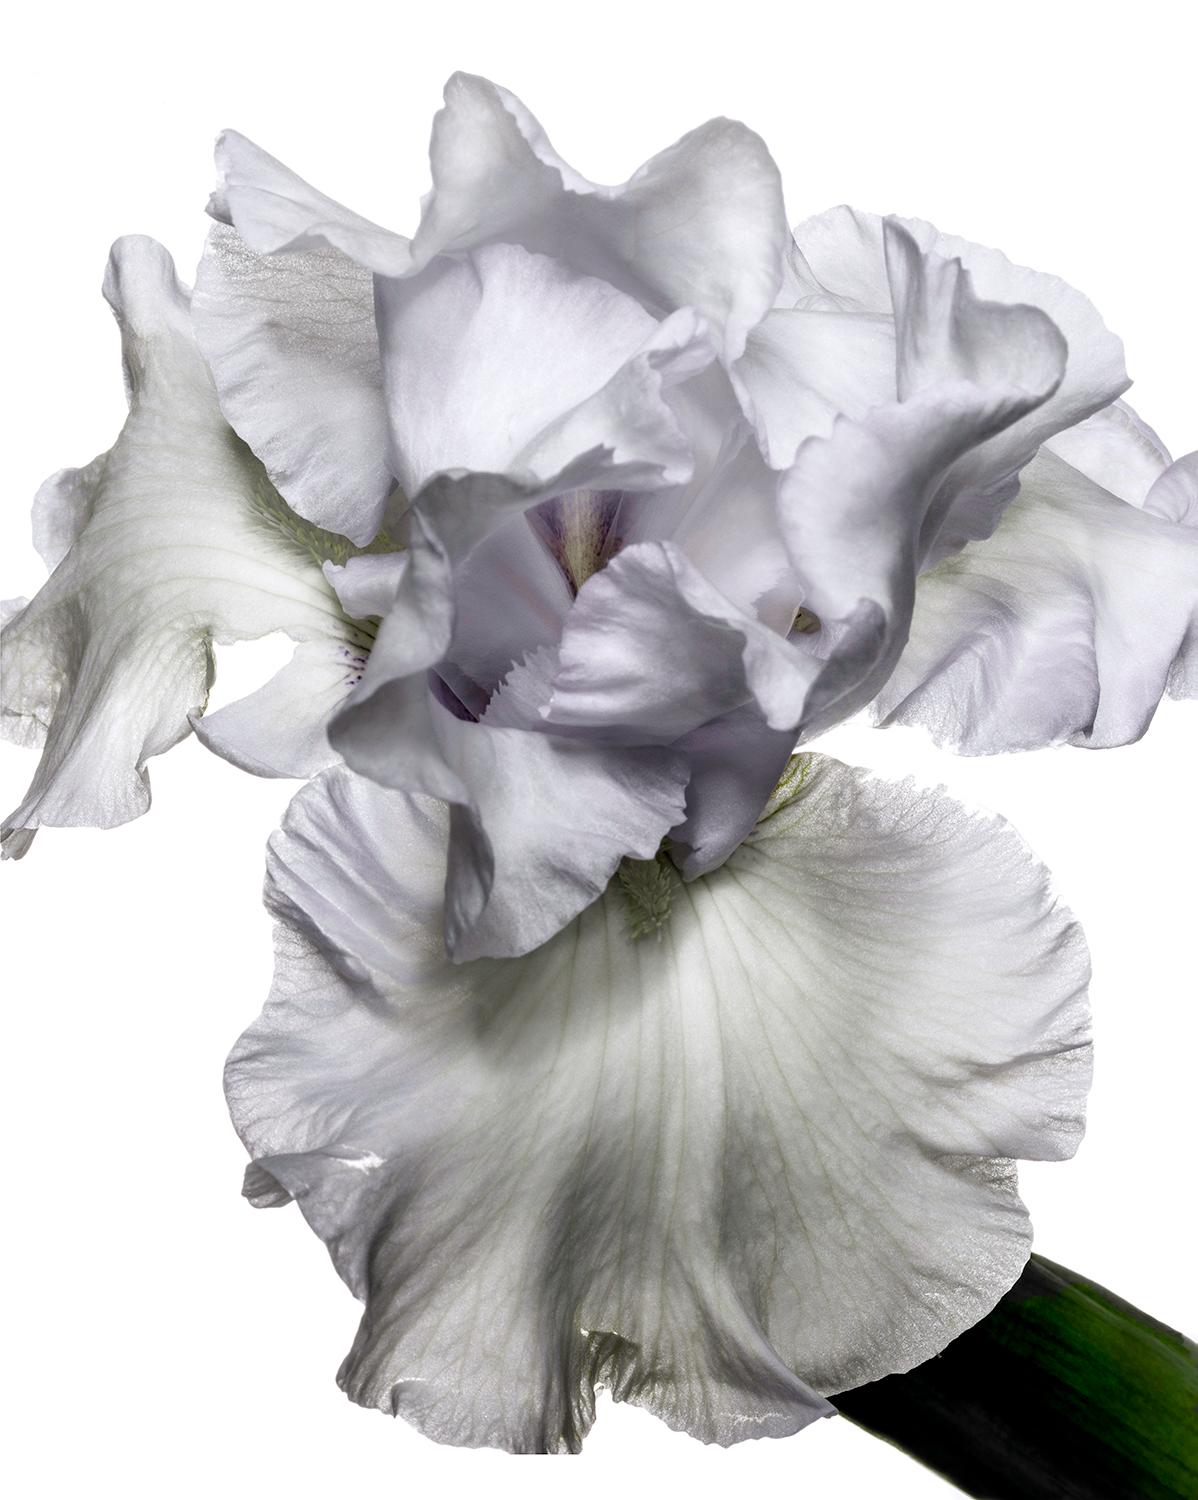 Flora Italiana ( Iris Bianco ) - large format botanical still life photograph